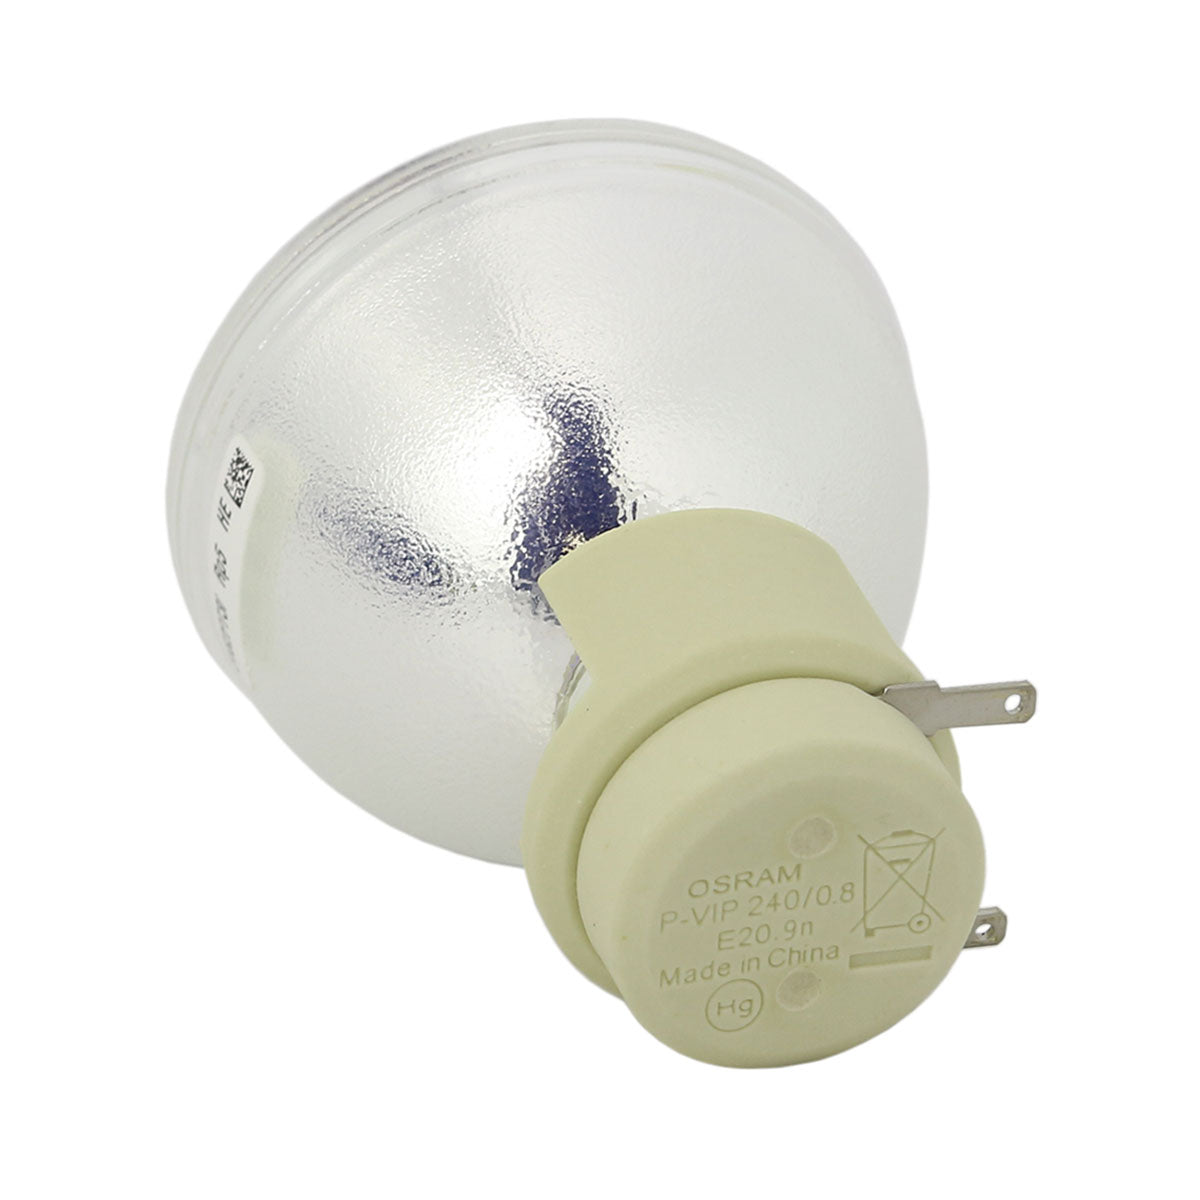 Viewsonic RLC-124 Osram Projector Bare Lamp